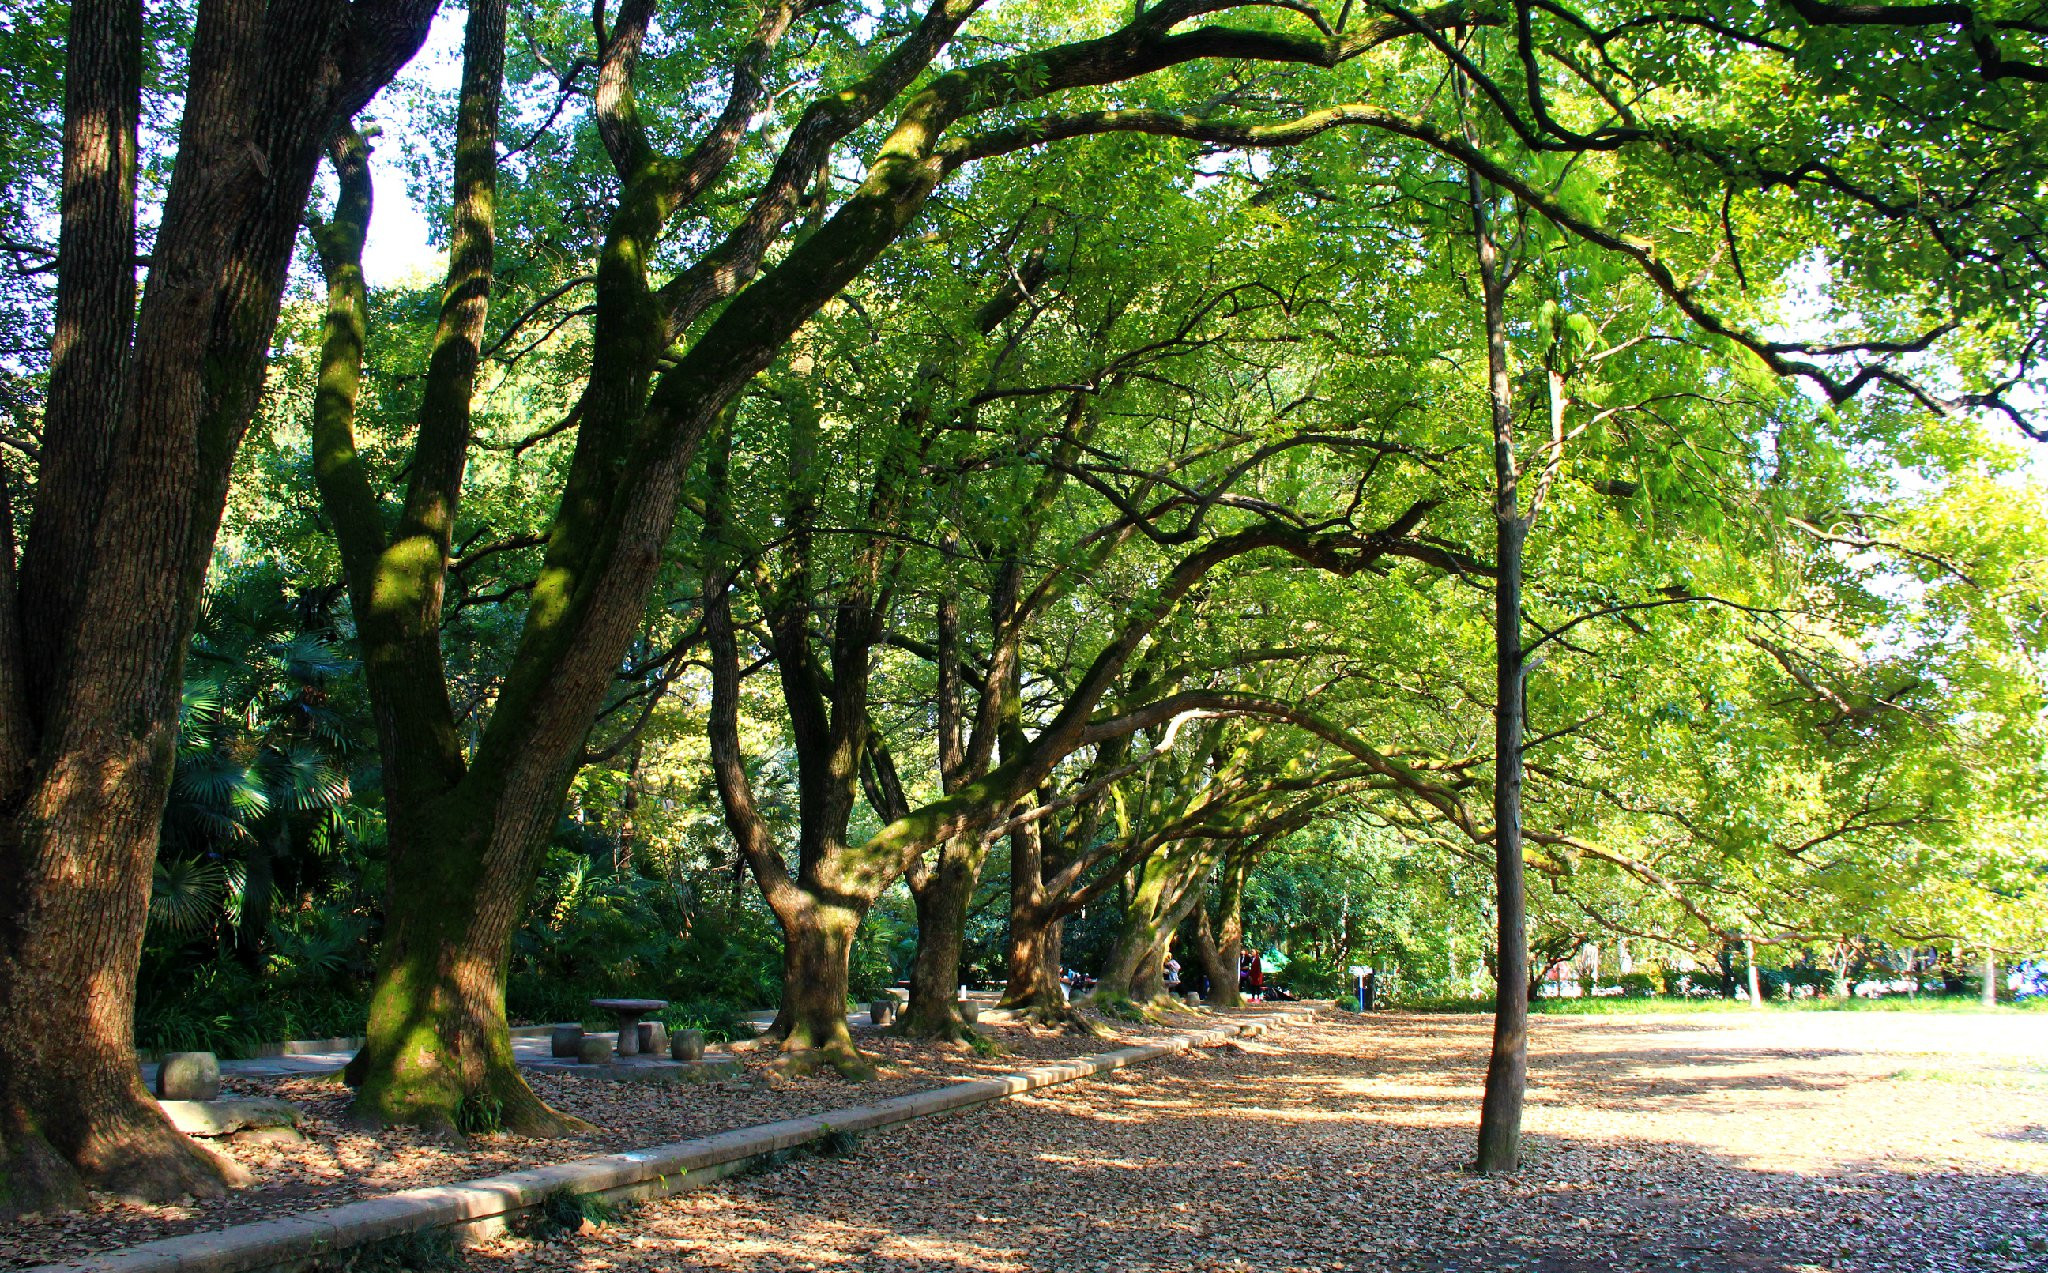 Trees in wuhan university